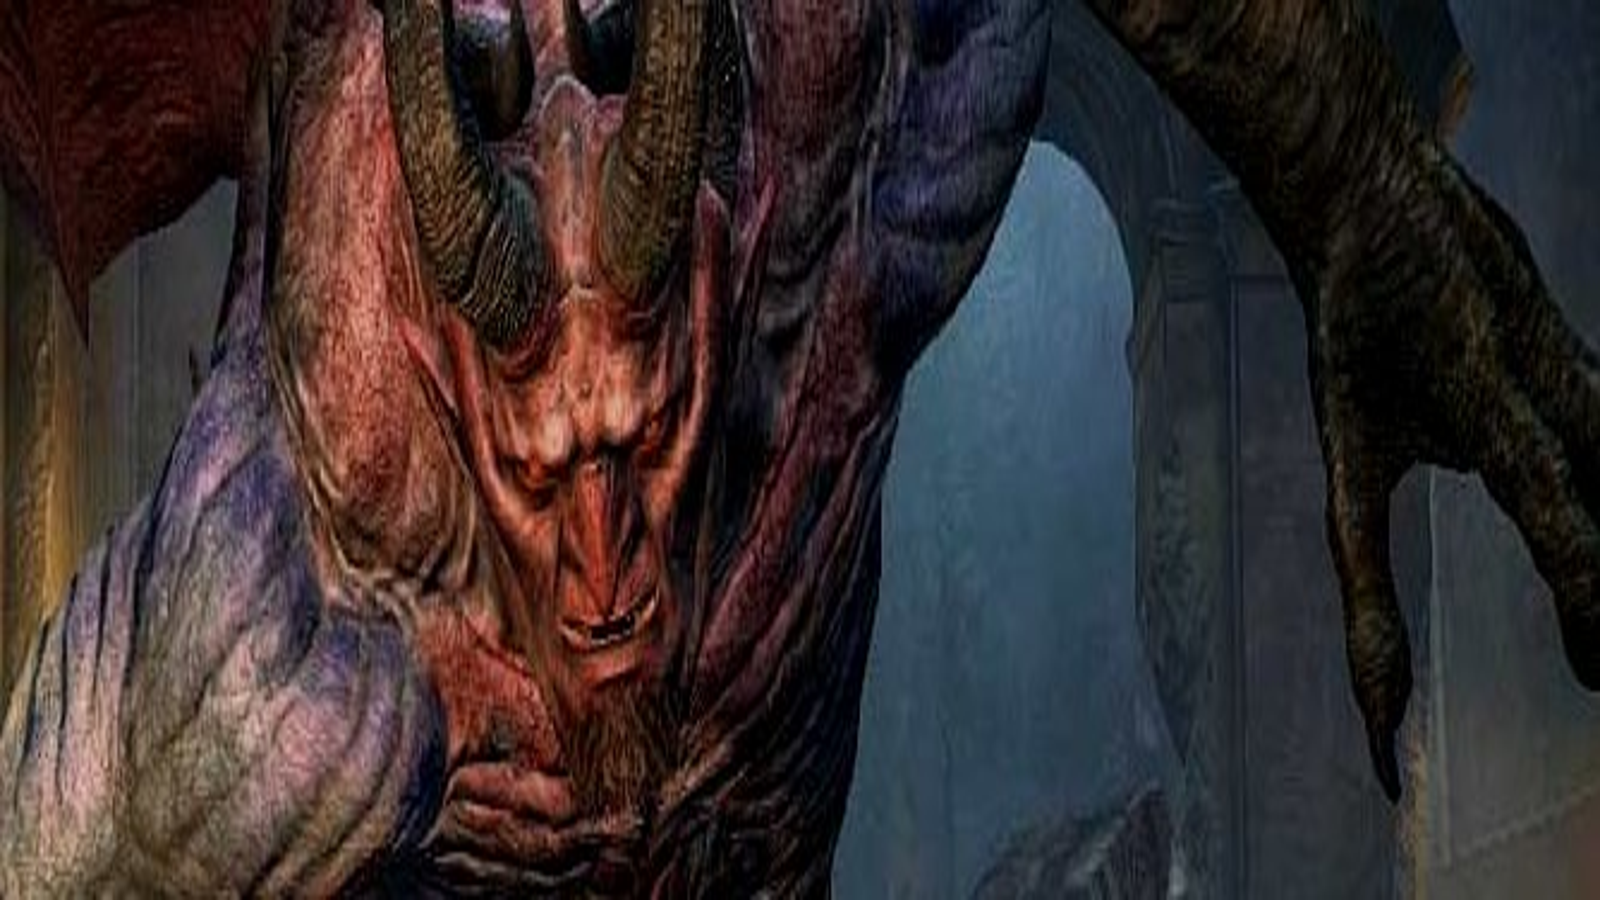 Dark Arisen's Bitterblack Isle is coming to Dragon's Dogma Online